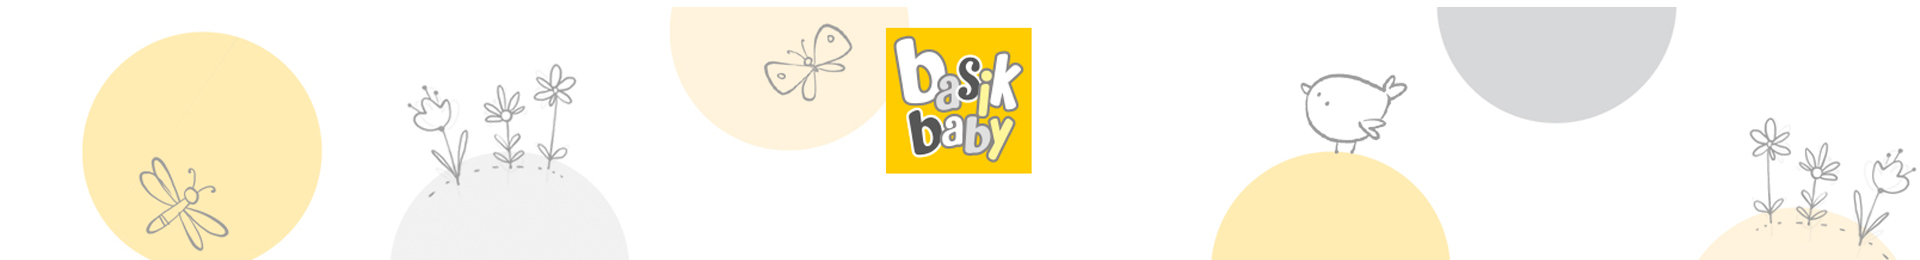 Basik Baby